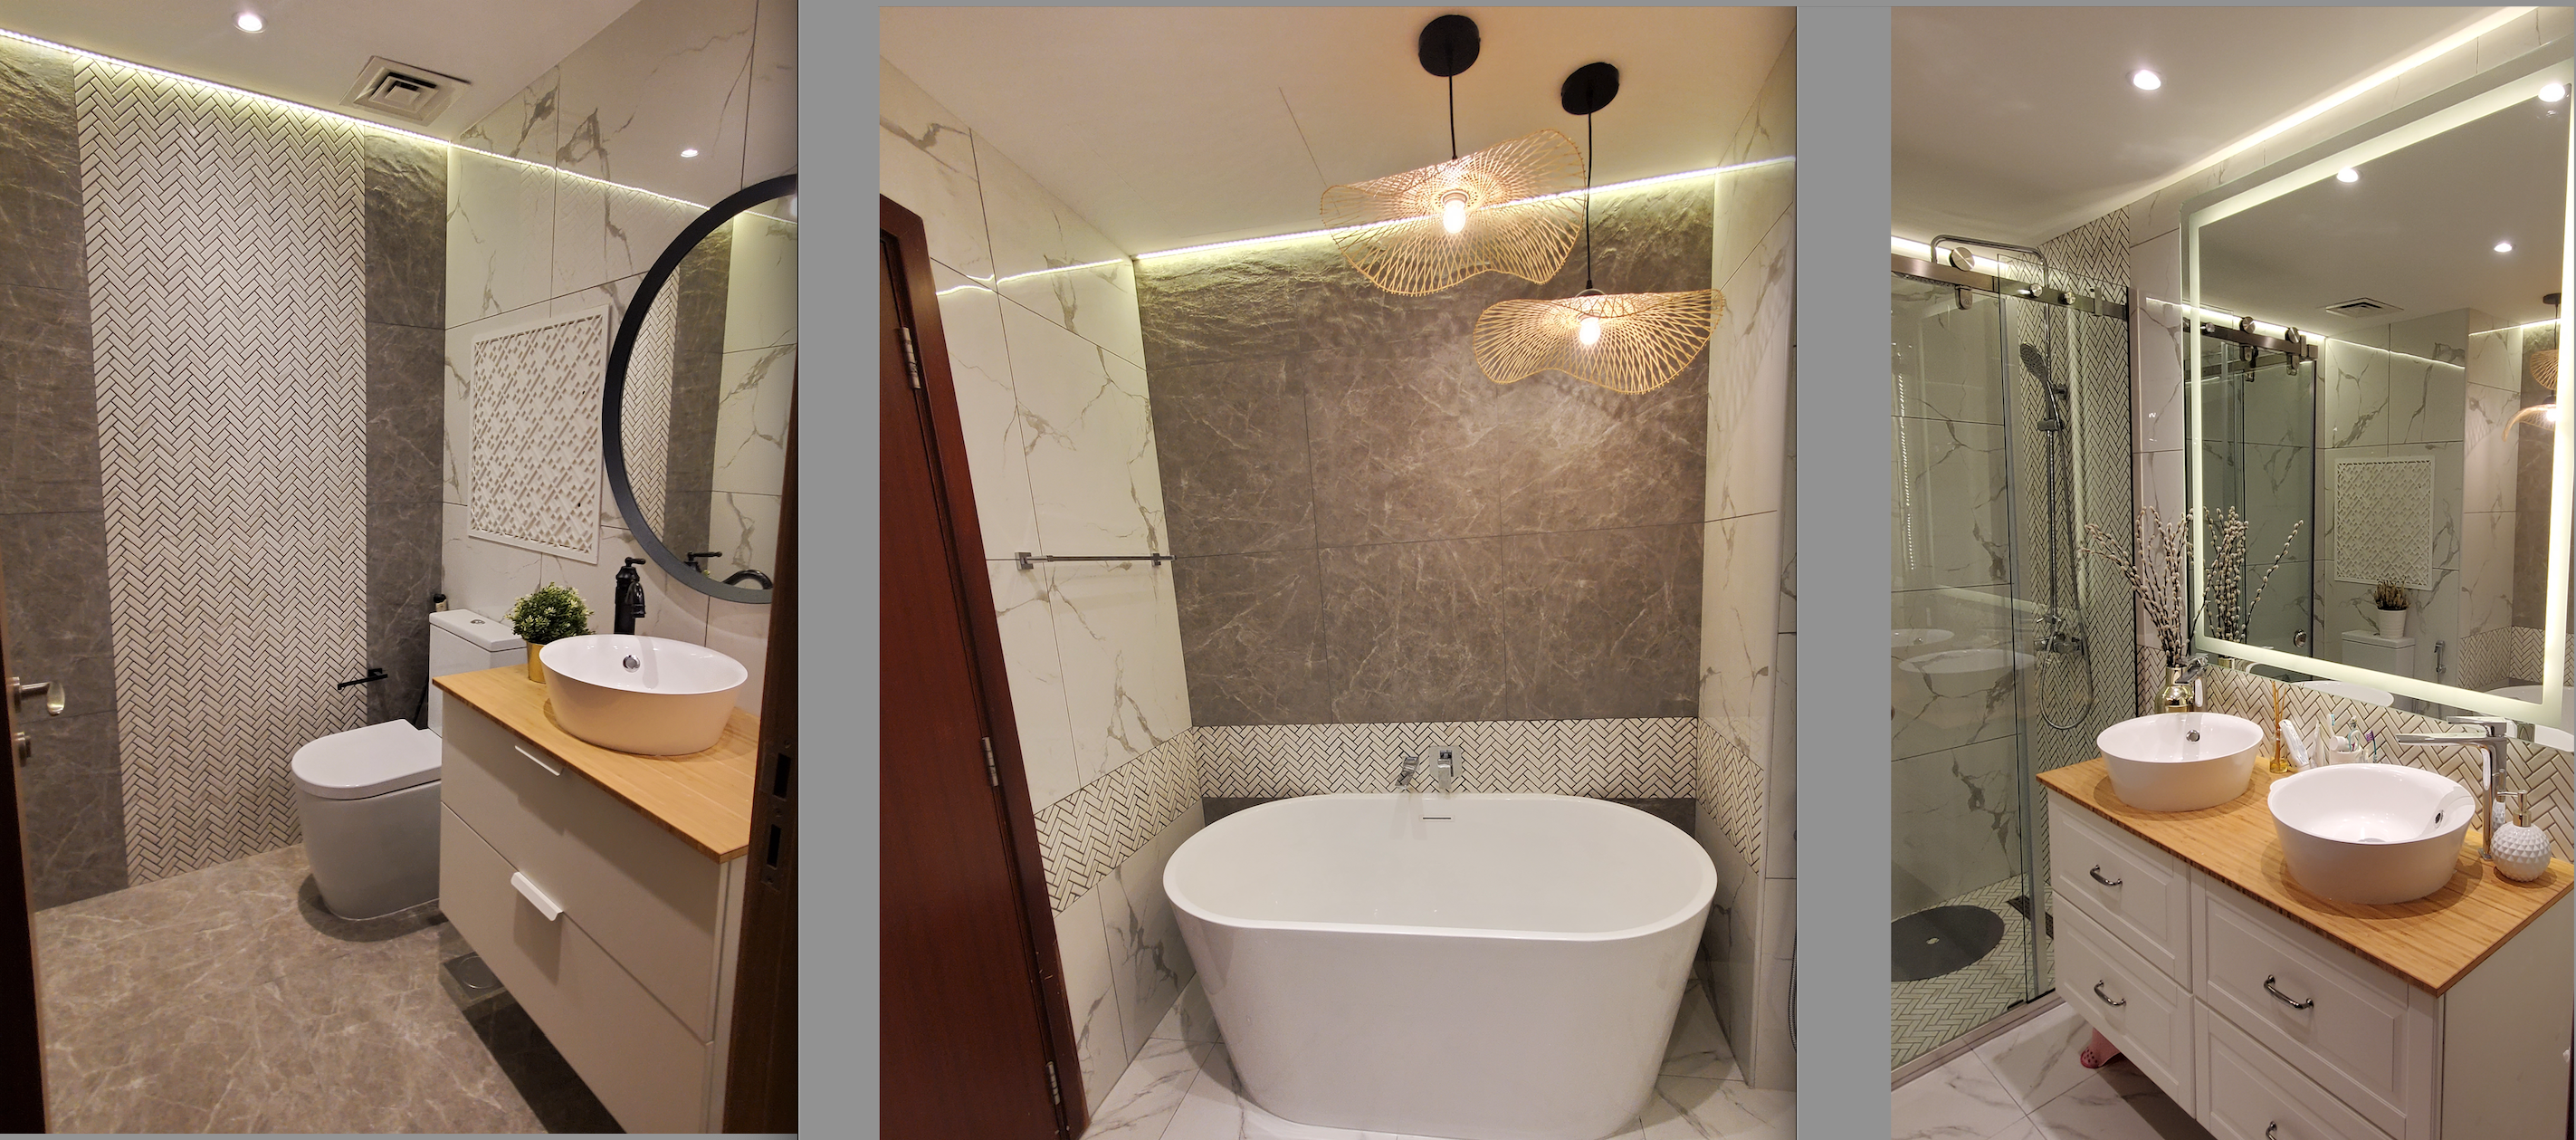 JBR shams bathroom renovations, dubai fitout bathroom kitchen design, interior designer dubai, bathroom fitout